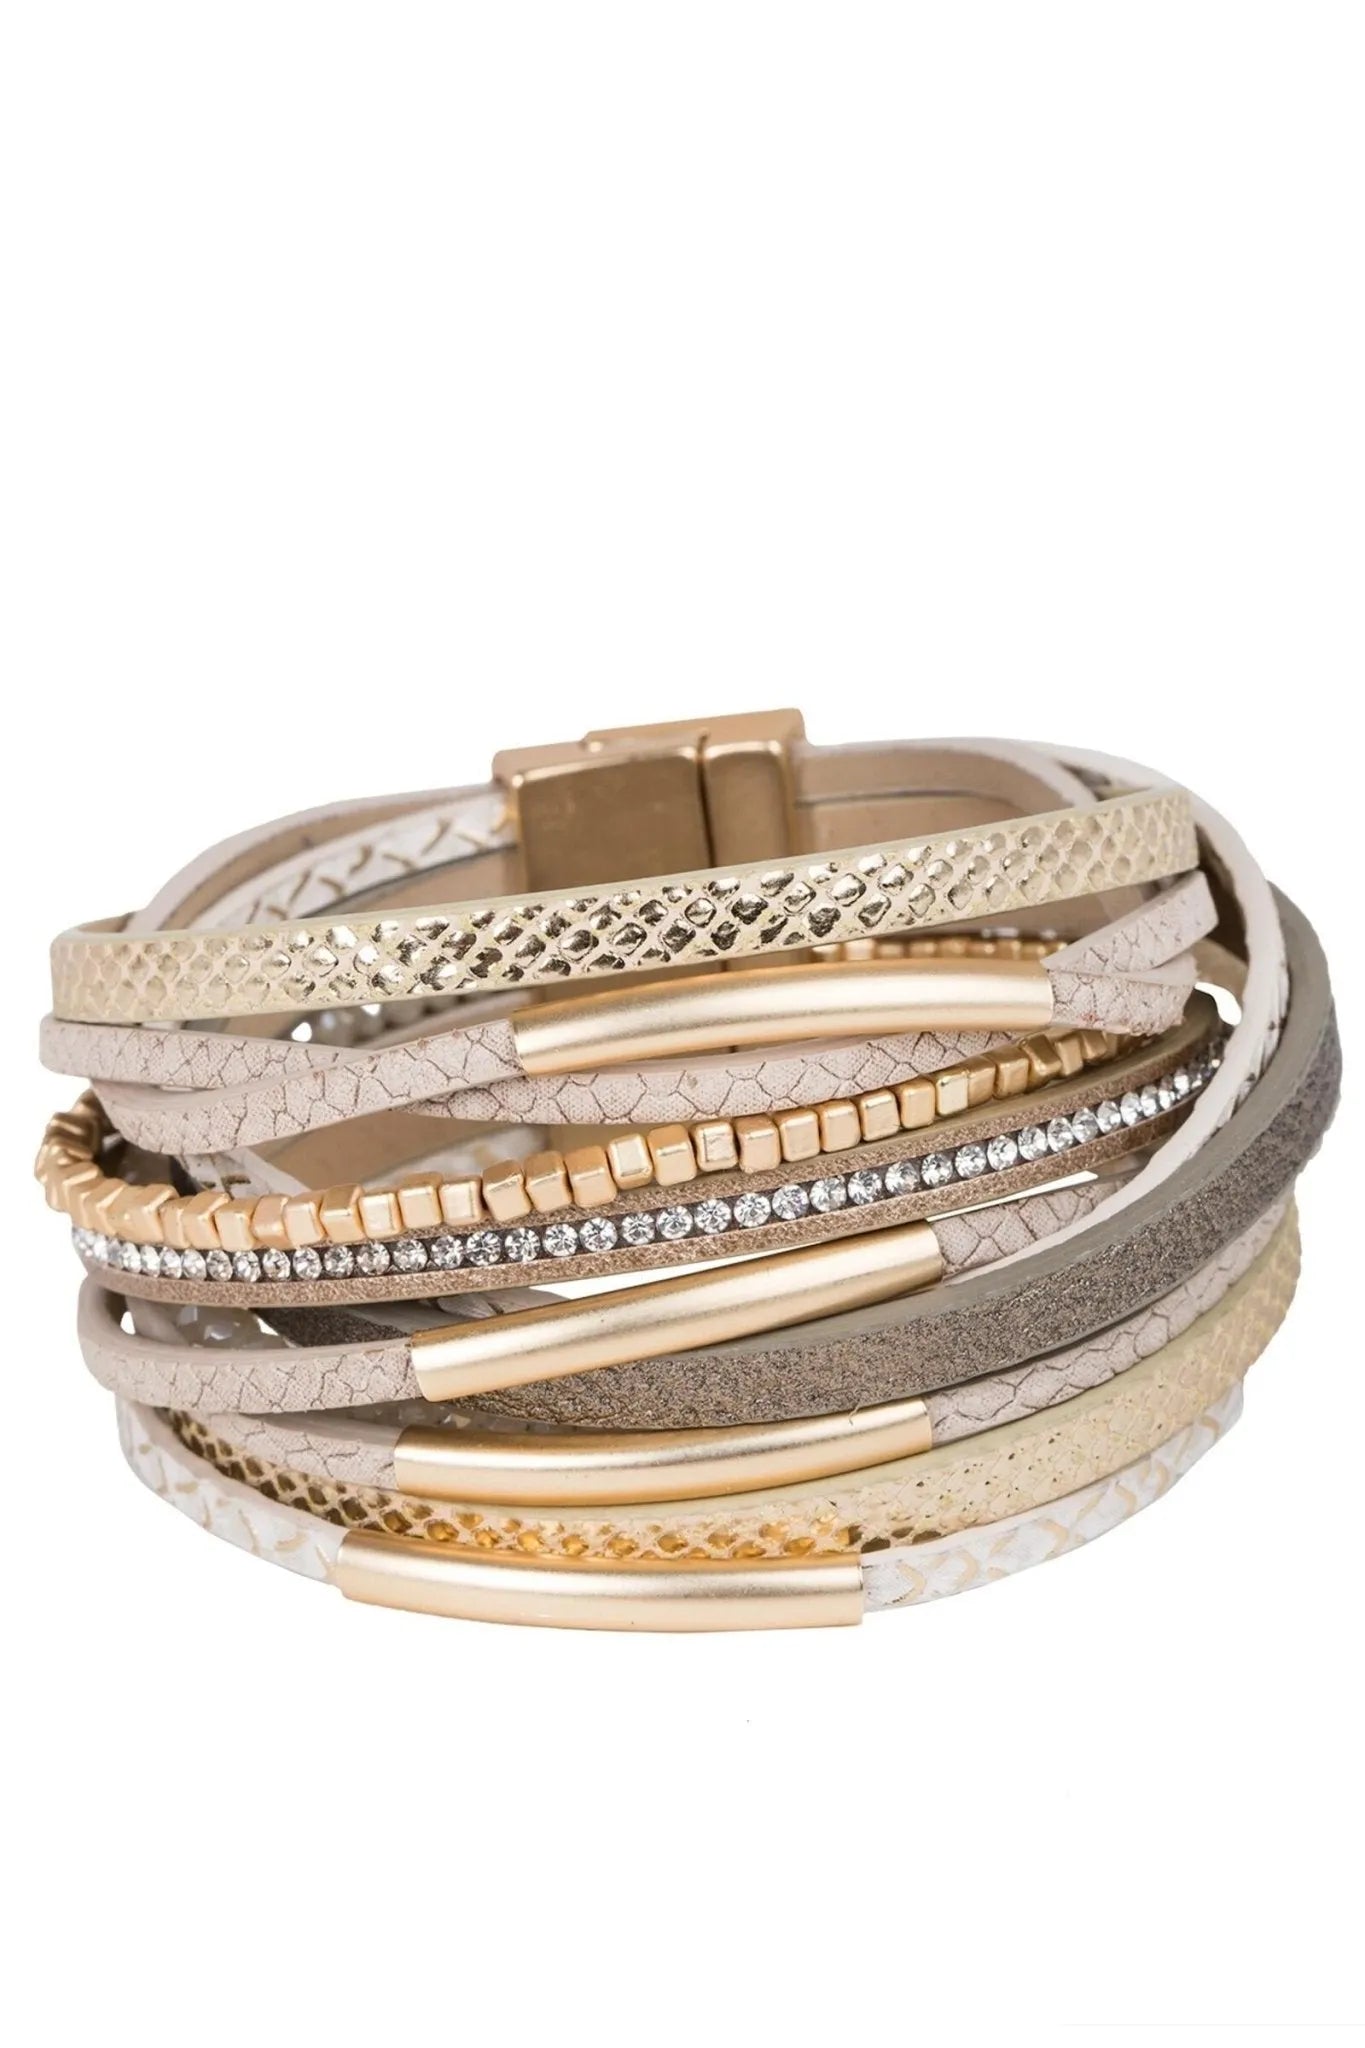 Glimmer Leather Bracelet - SAACHI - Blanched Almond - Bracelet